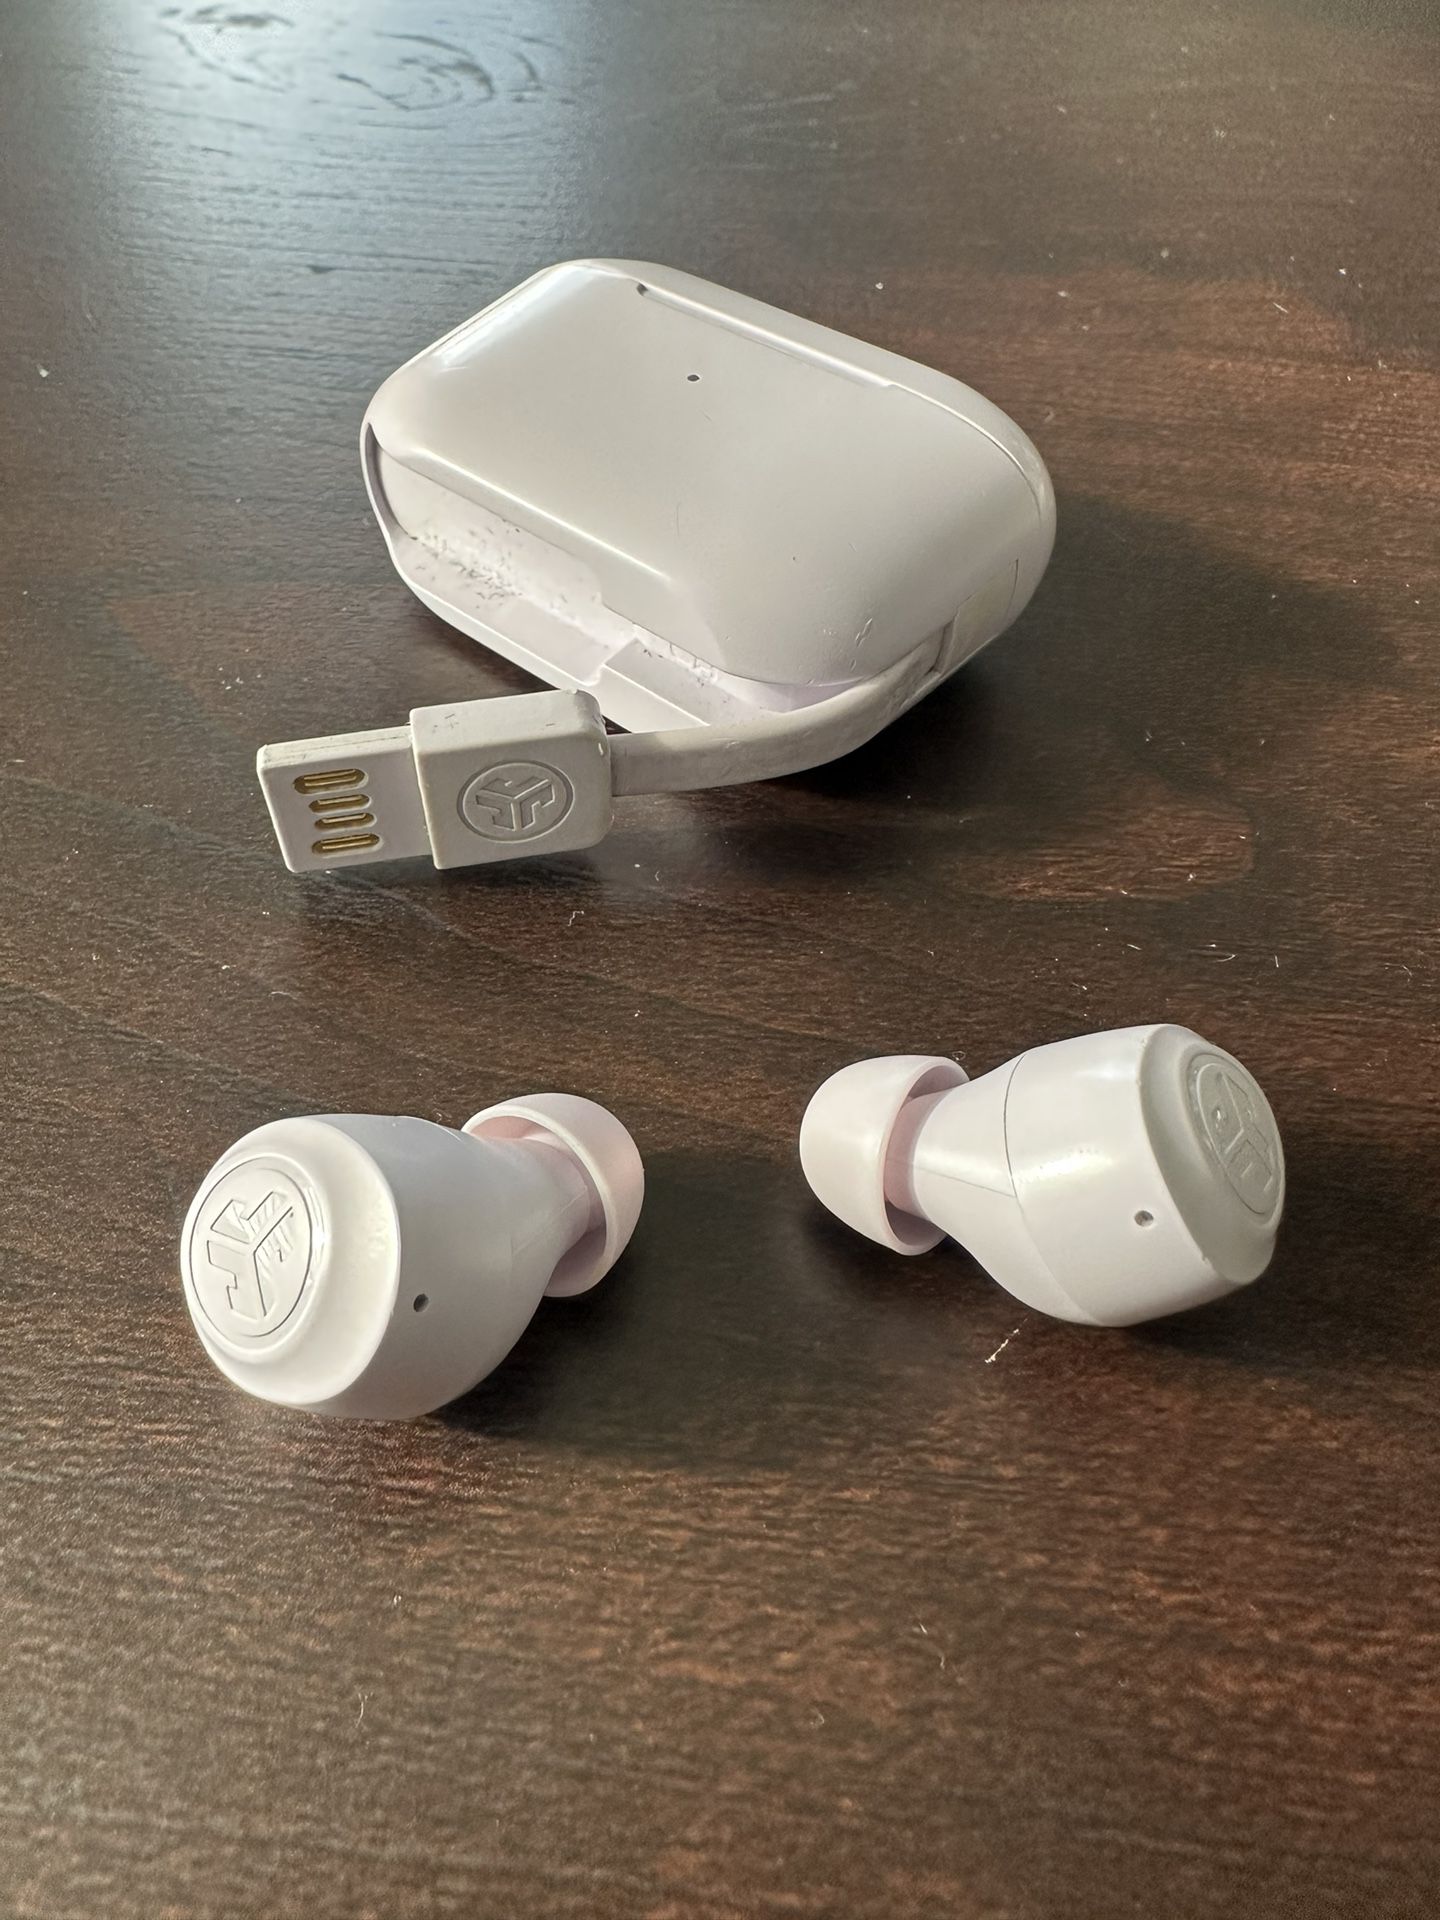 JLab GO air pop wireless earbuds $25